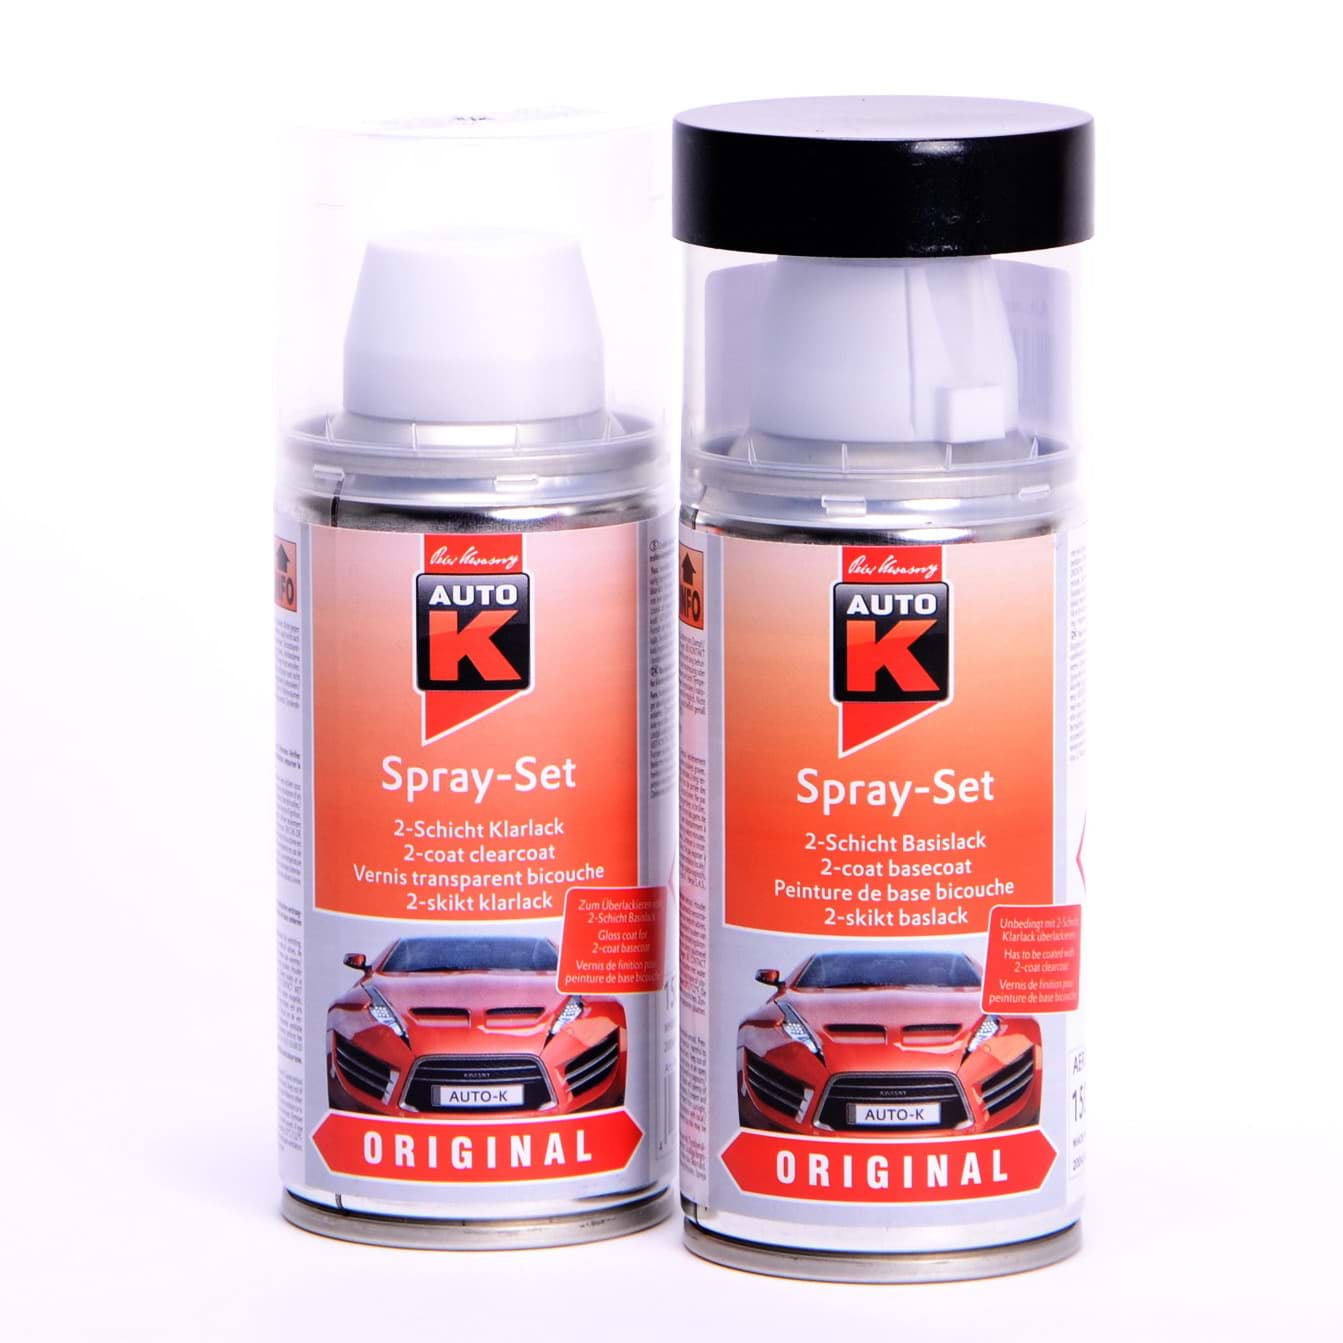 Afbeelding van Auto-K Spray-Set Autolack für Opel 285 atlantisblau 21396